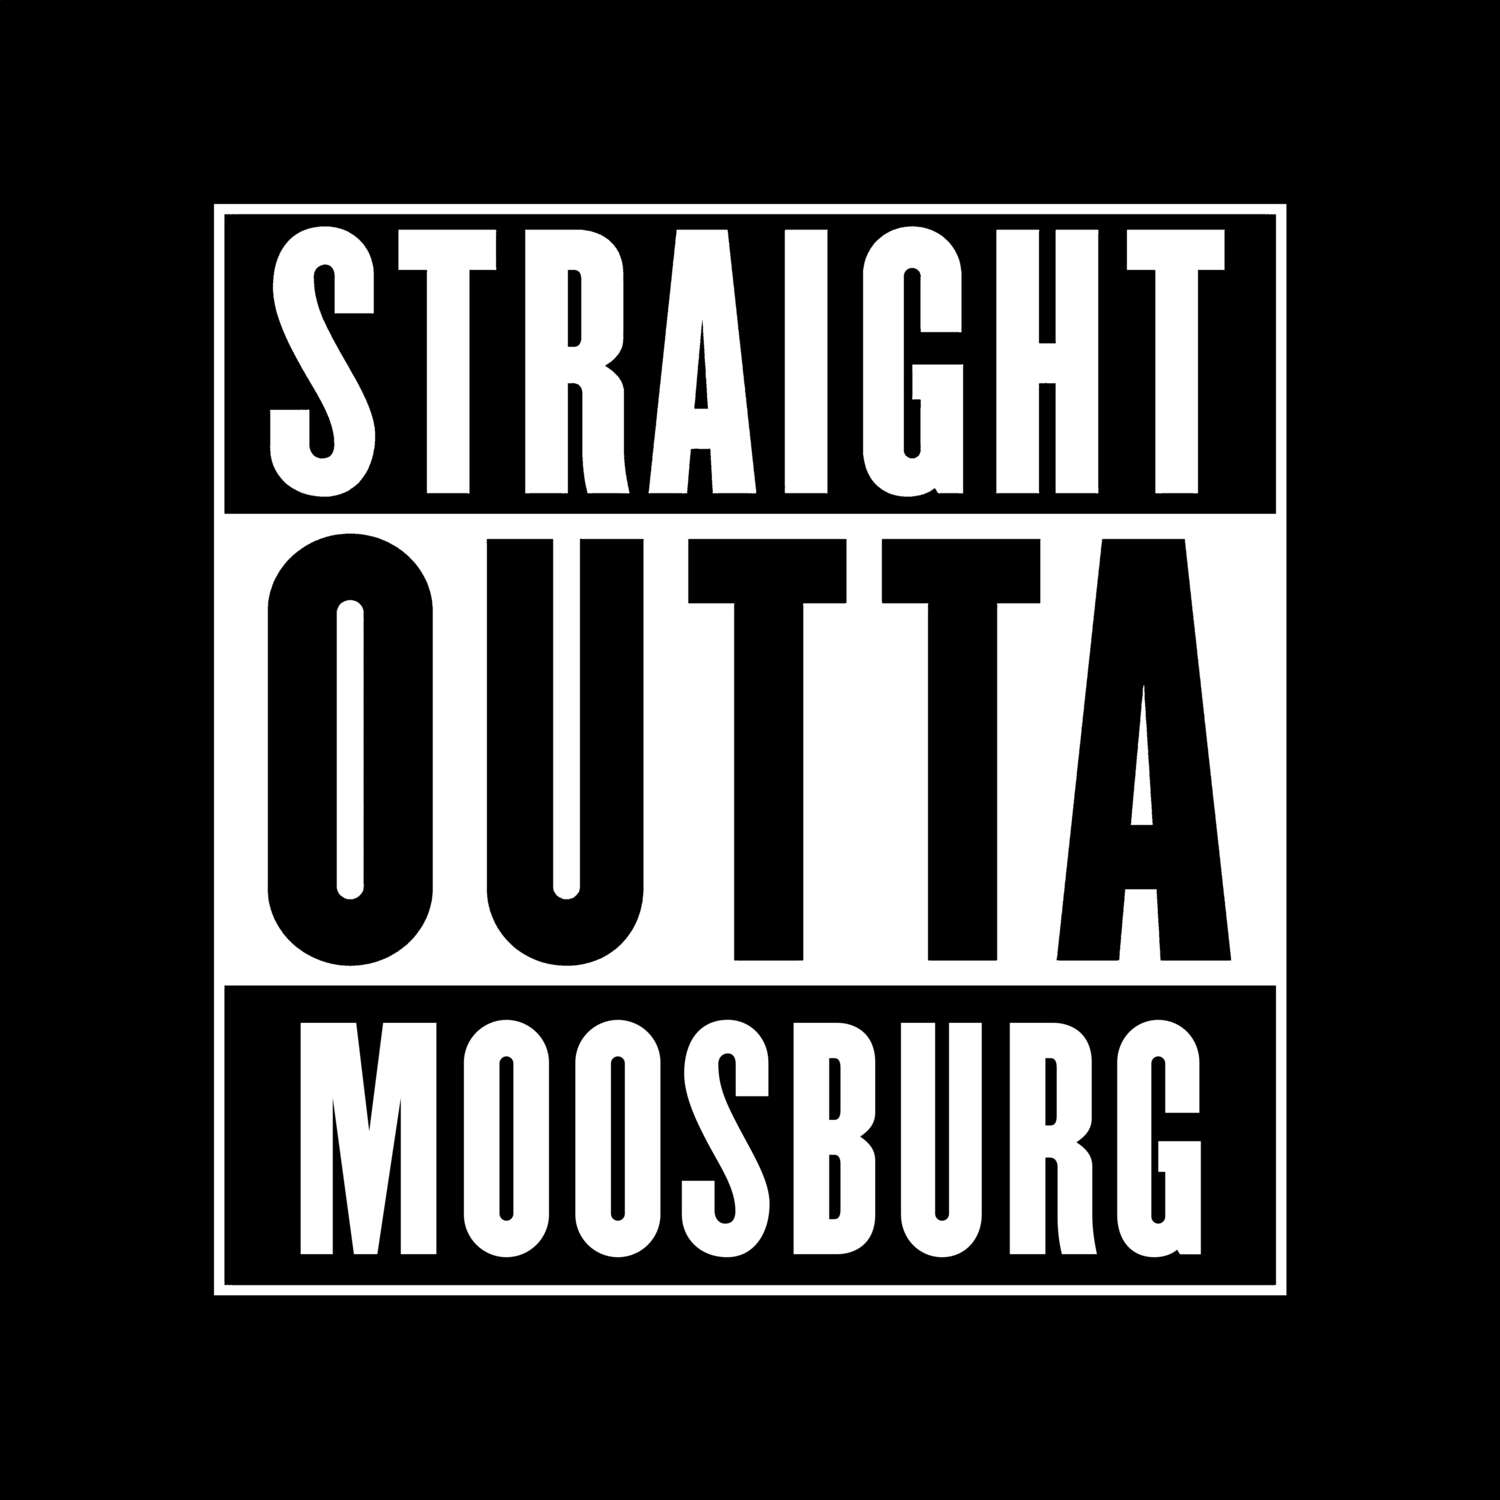 Moosburg T-Shirt »Straight Outta«